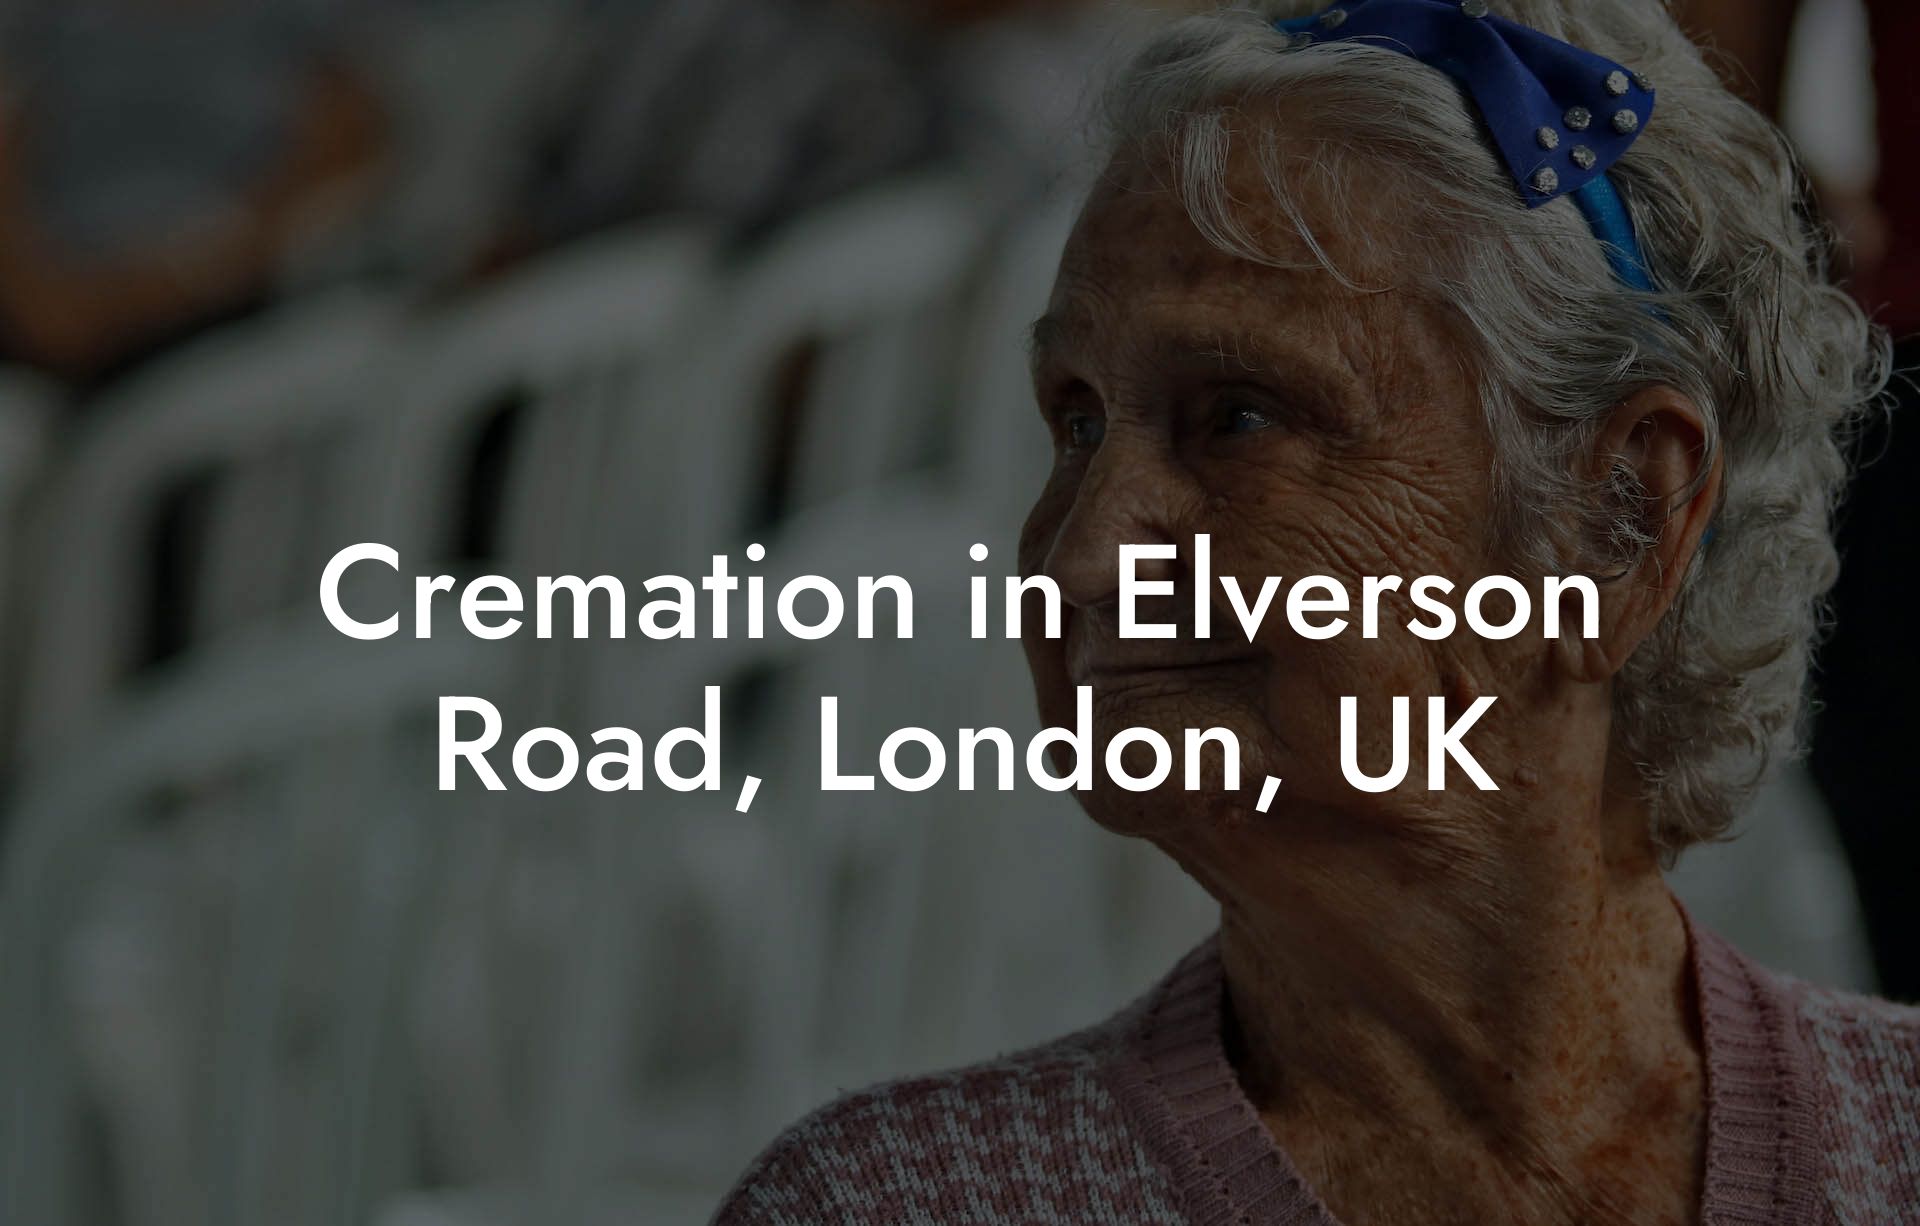 Cremation in Elverson Road, London, UK